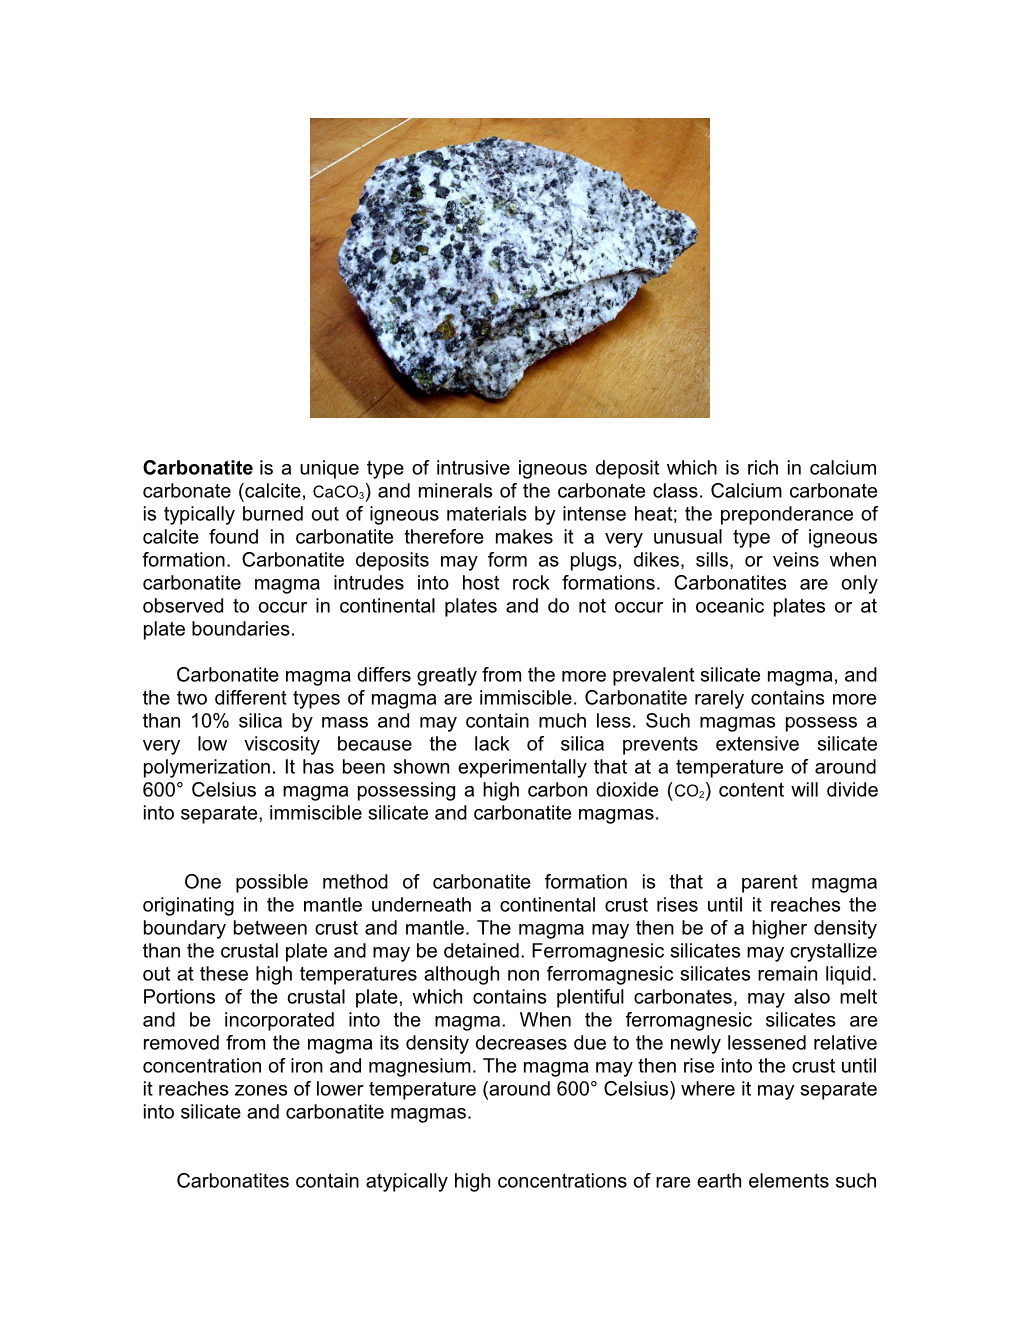 Carbonatiteis a Unique Type of Intrusive Igneous Deposit Which Is Rich in Calcium Carbonate